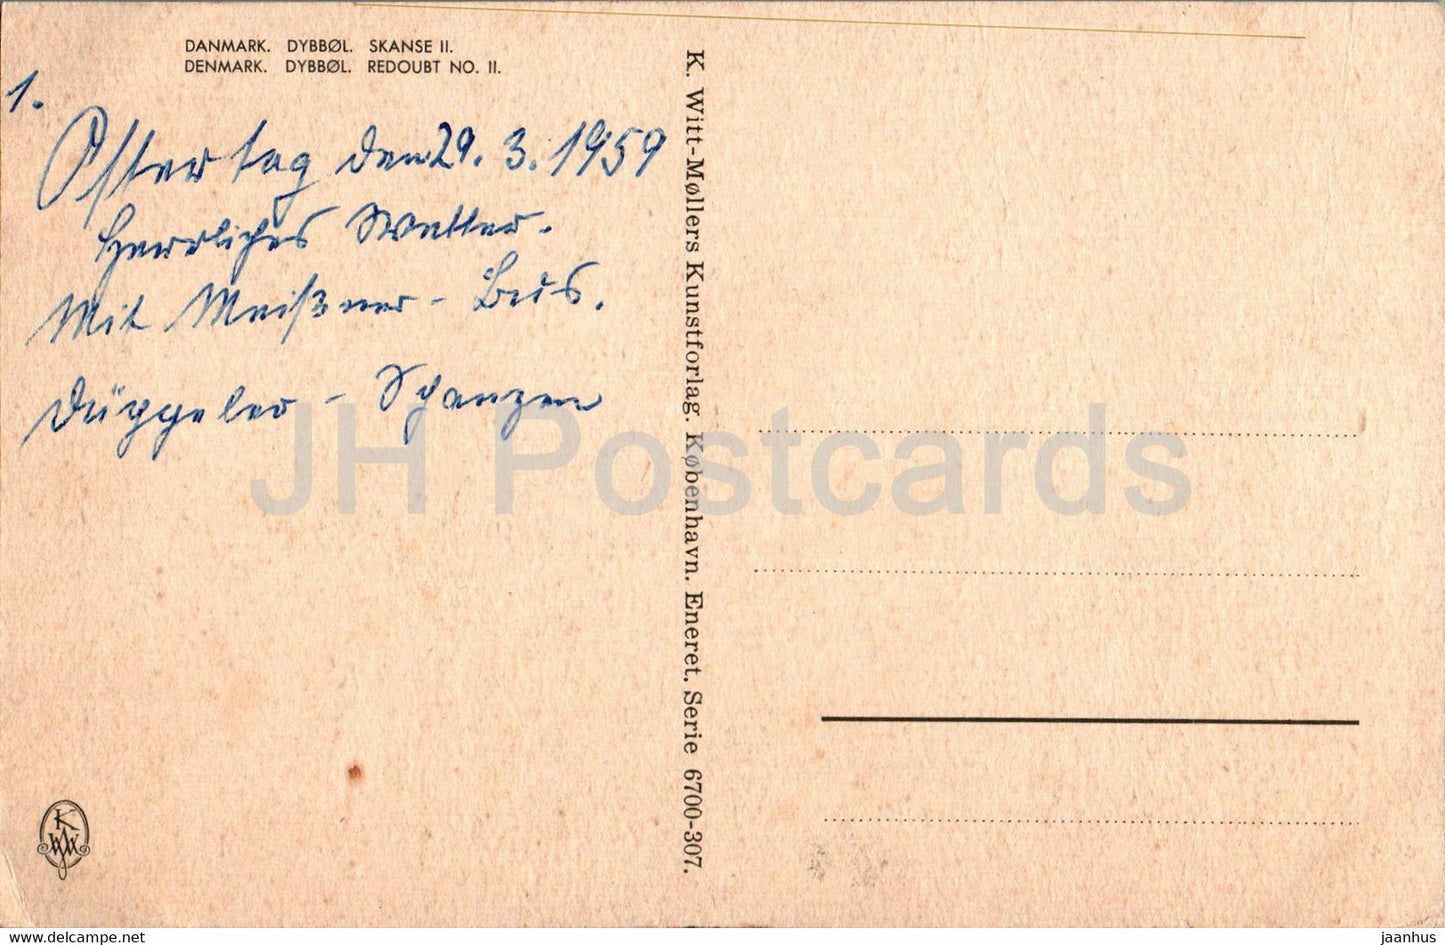 Dybbol Skanse - Redoute No 11 - cartes postales anciennes - 1959 - Danemark - occasion